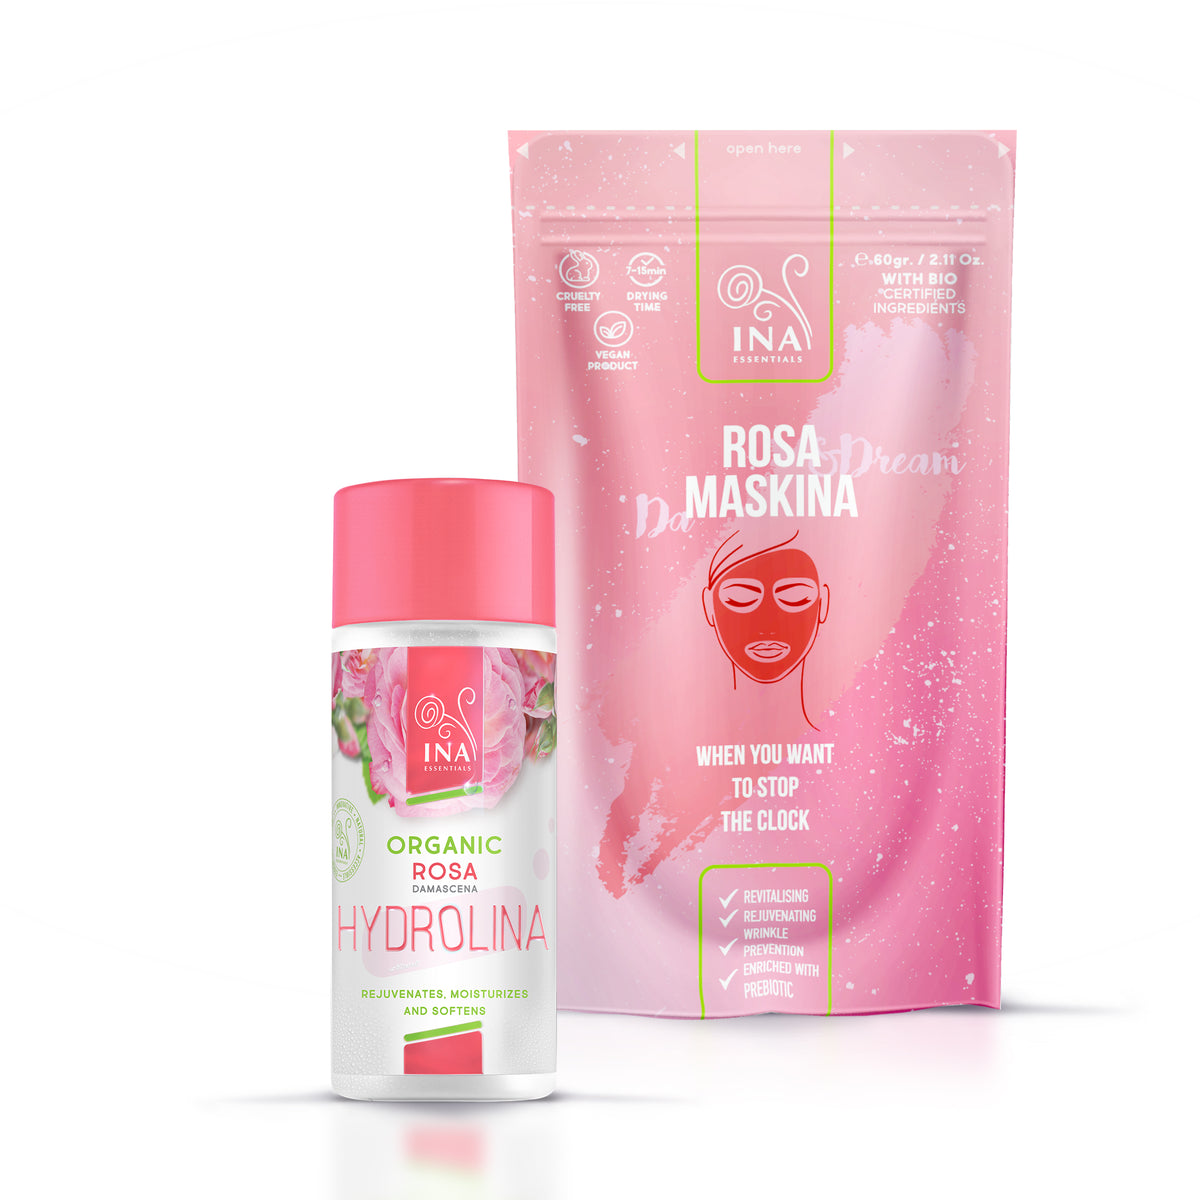 Rose Maskina (60g) & Rose water-Hydrolina - DIY Combo  for NORMAL to MATURE skin